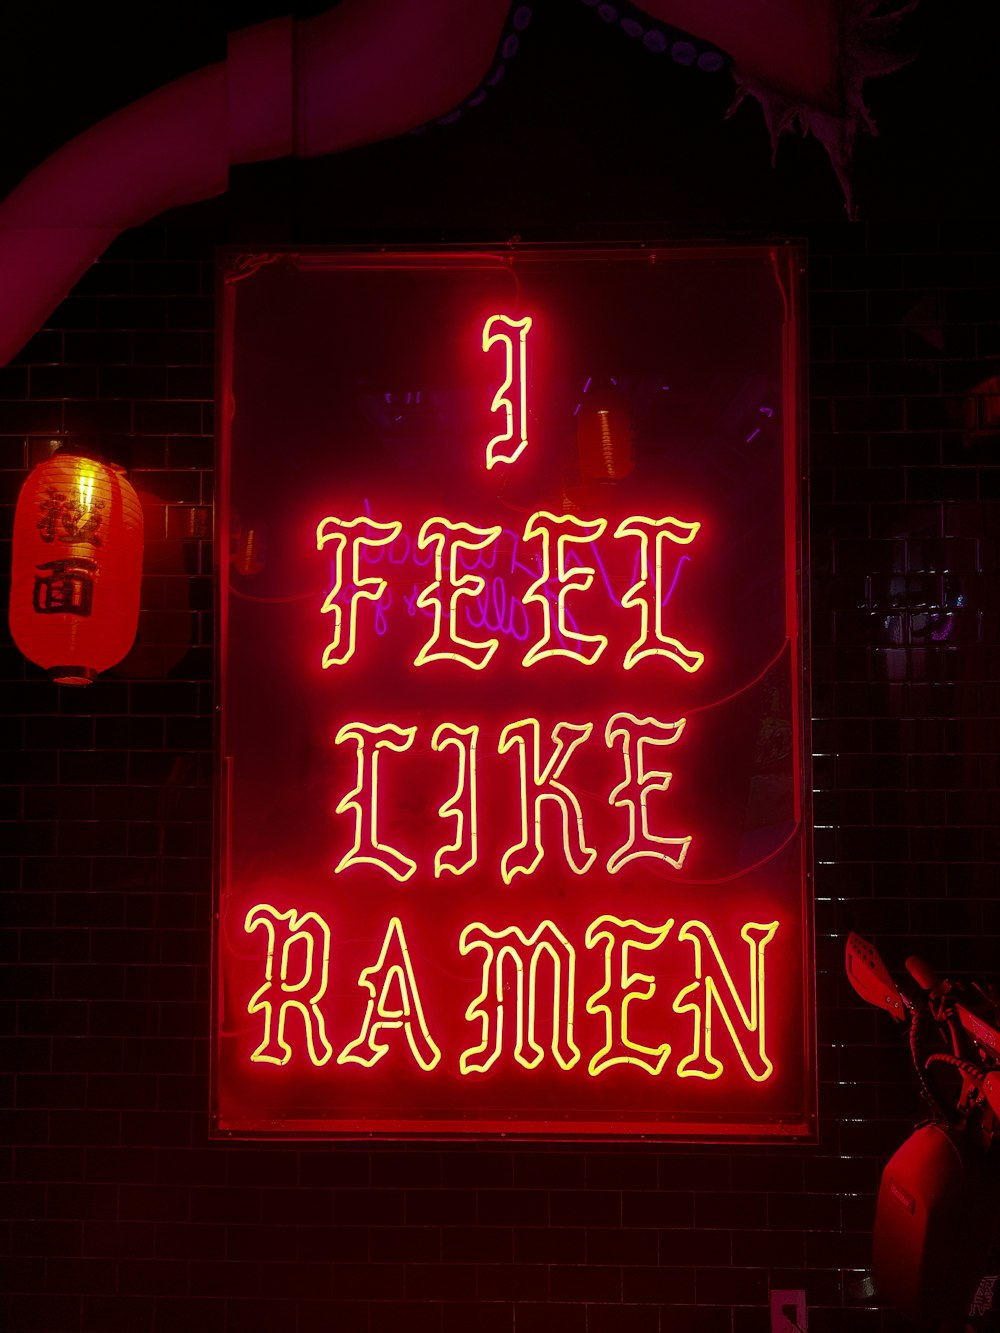 a neon sign that says 3 feet like ramen